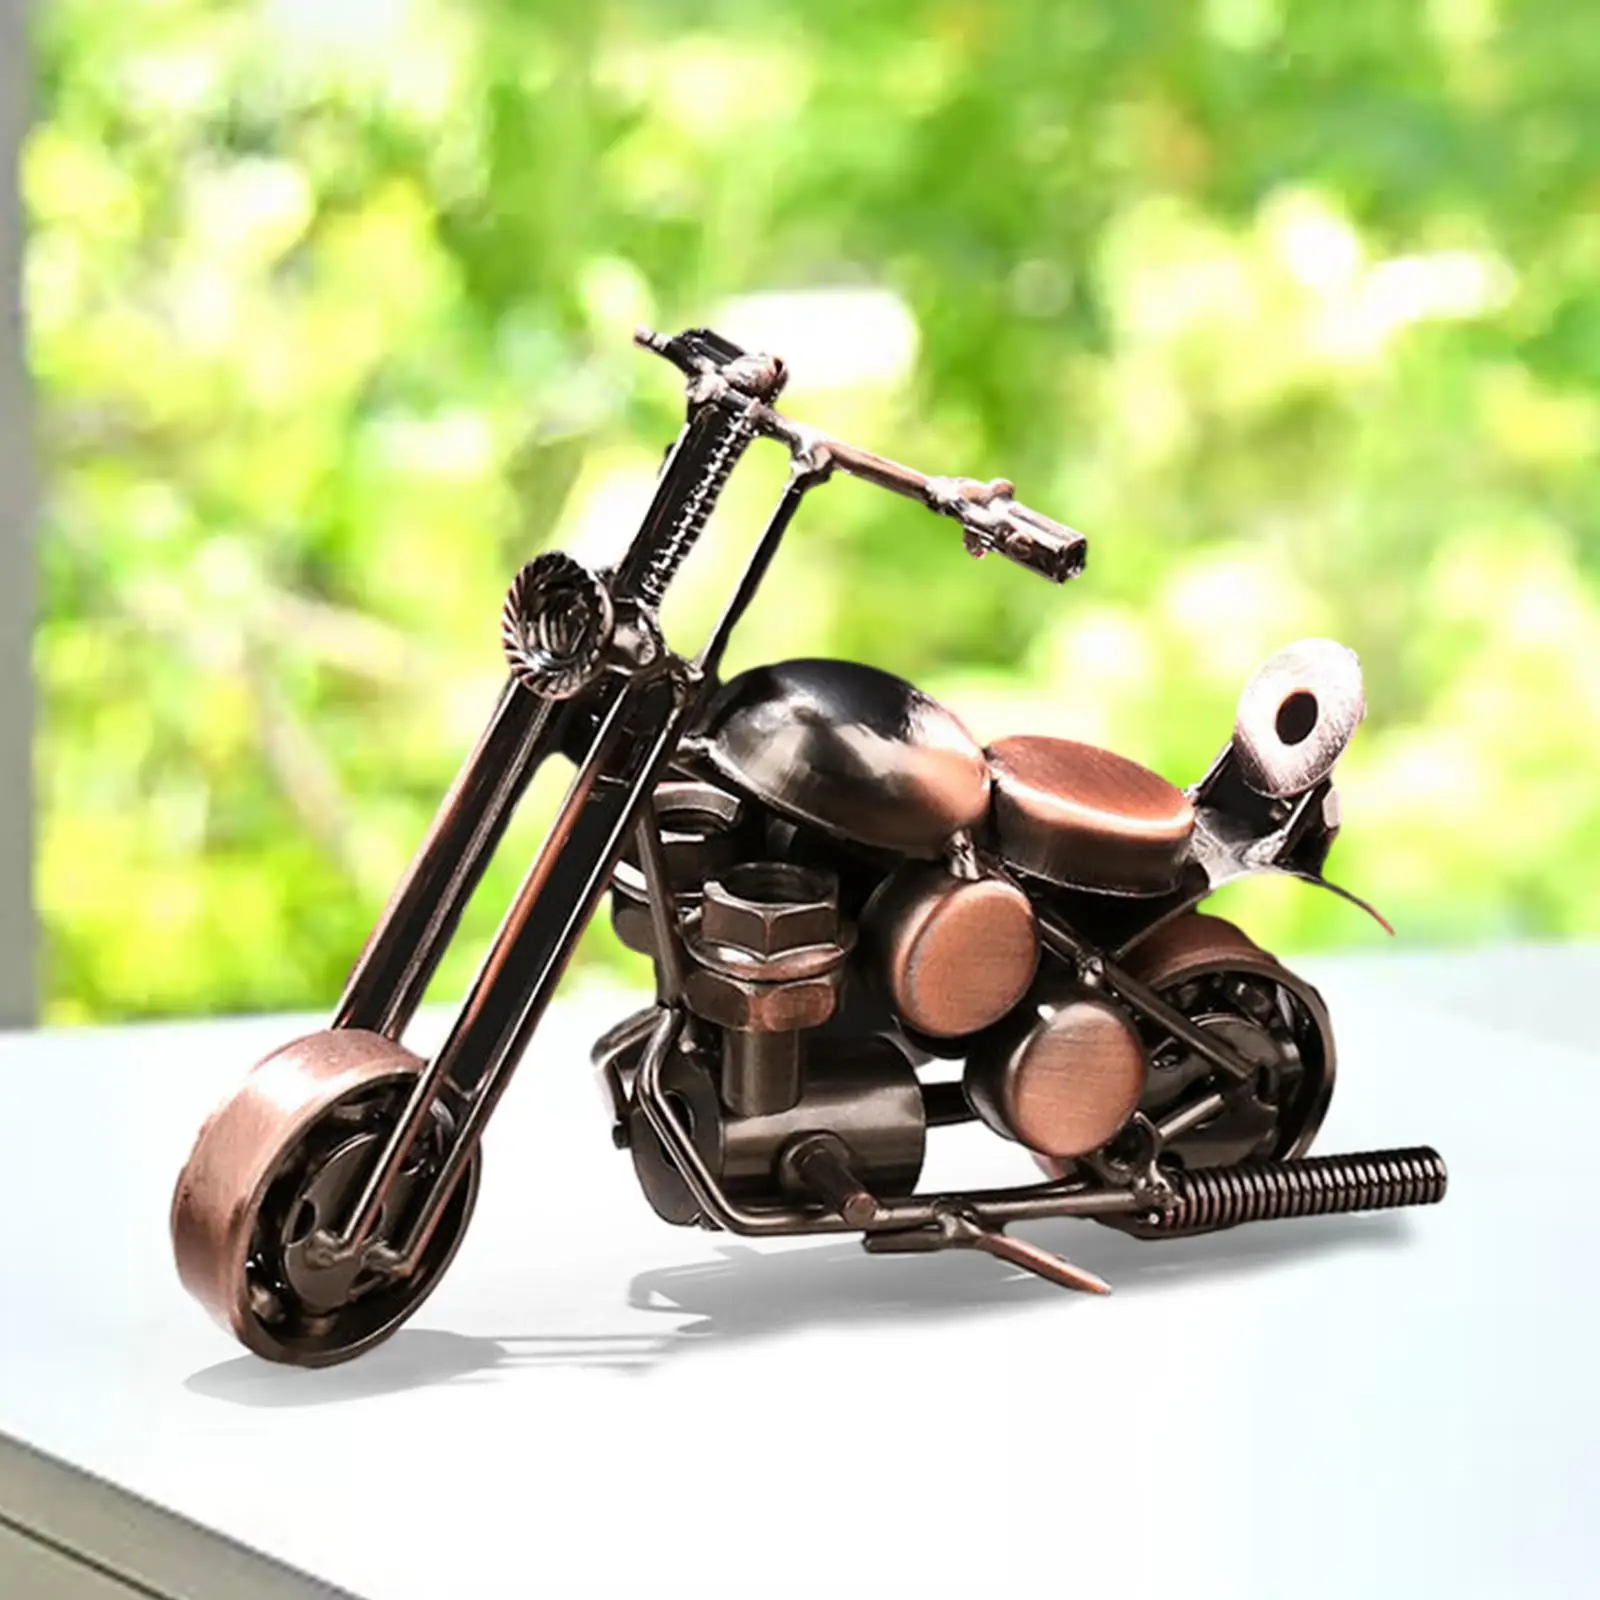 Metal Motorcycle Model Motorcycle Sculpture Decoration Birthday Creative Vintage Style Collection for Bookshelf Desktop Kids Dad